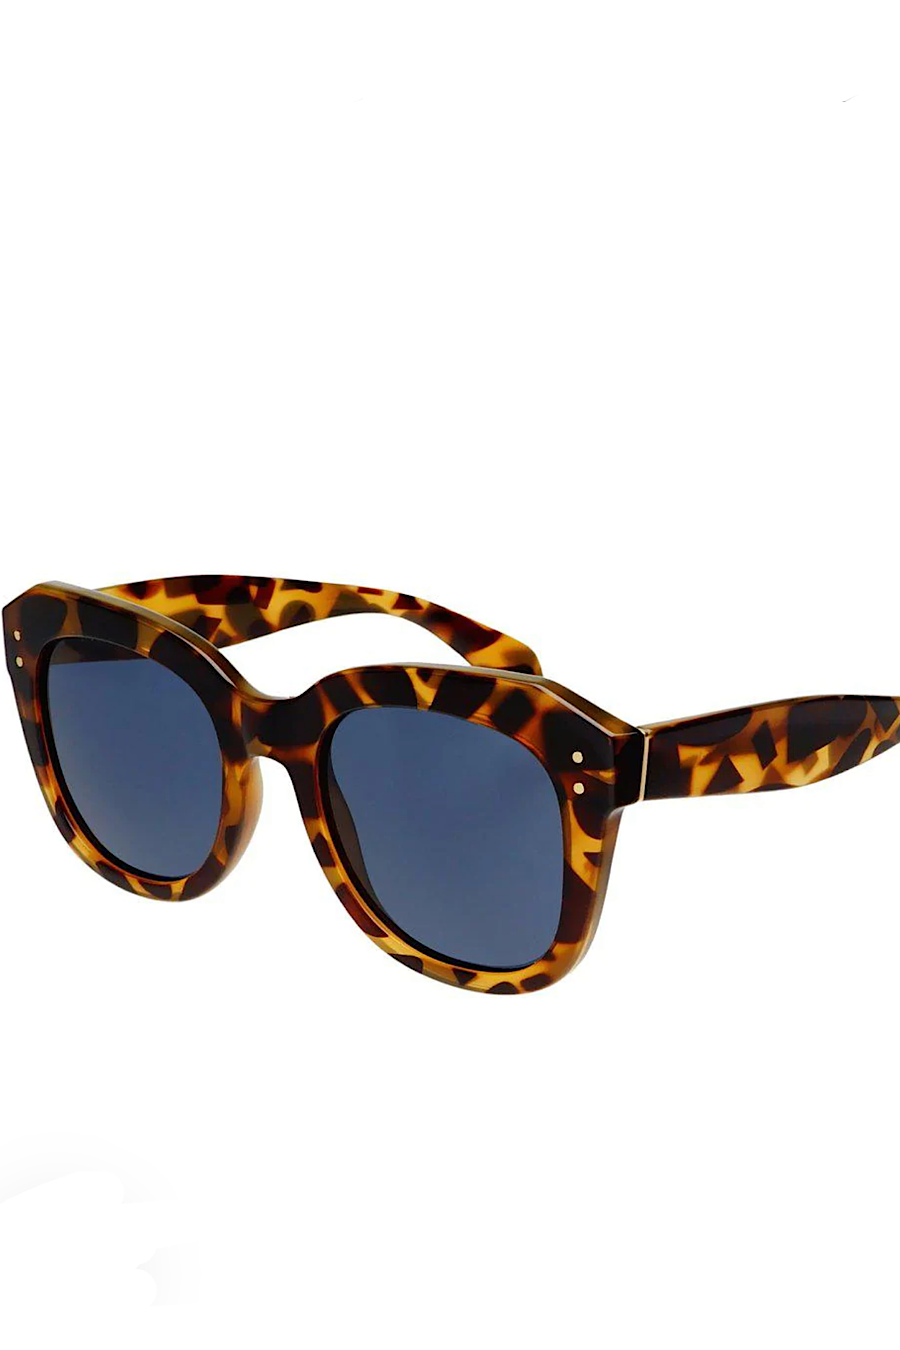 Freyrs Sweet Peach Sunglasses in Tortoise